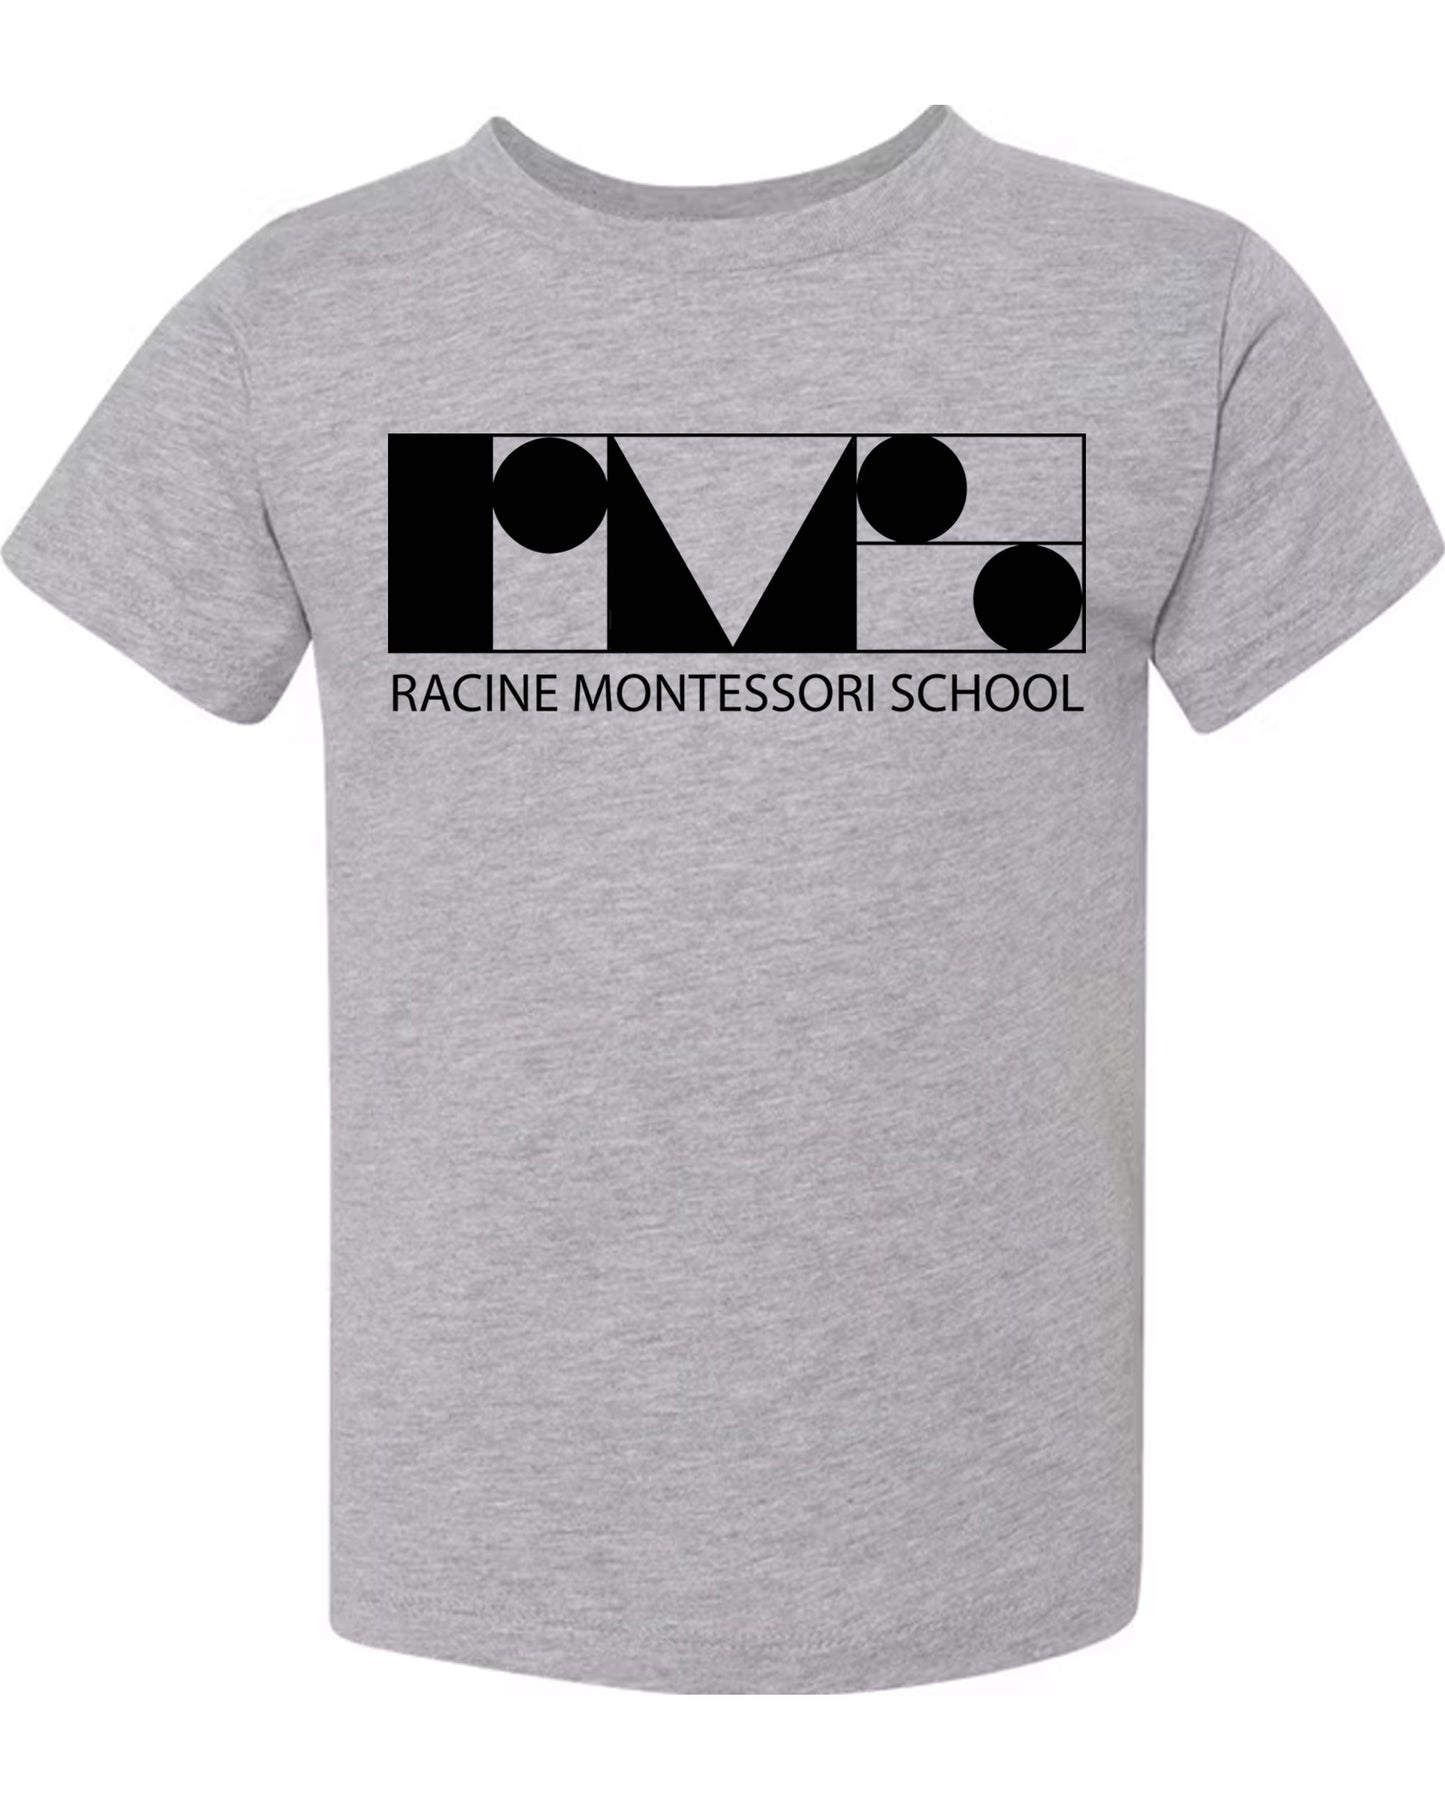 Racine Montessori T-shirt